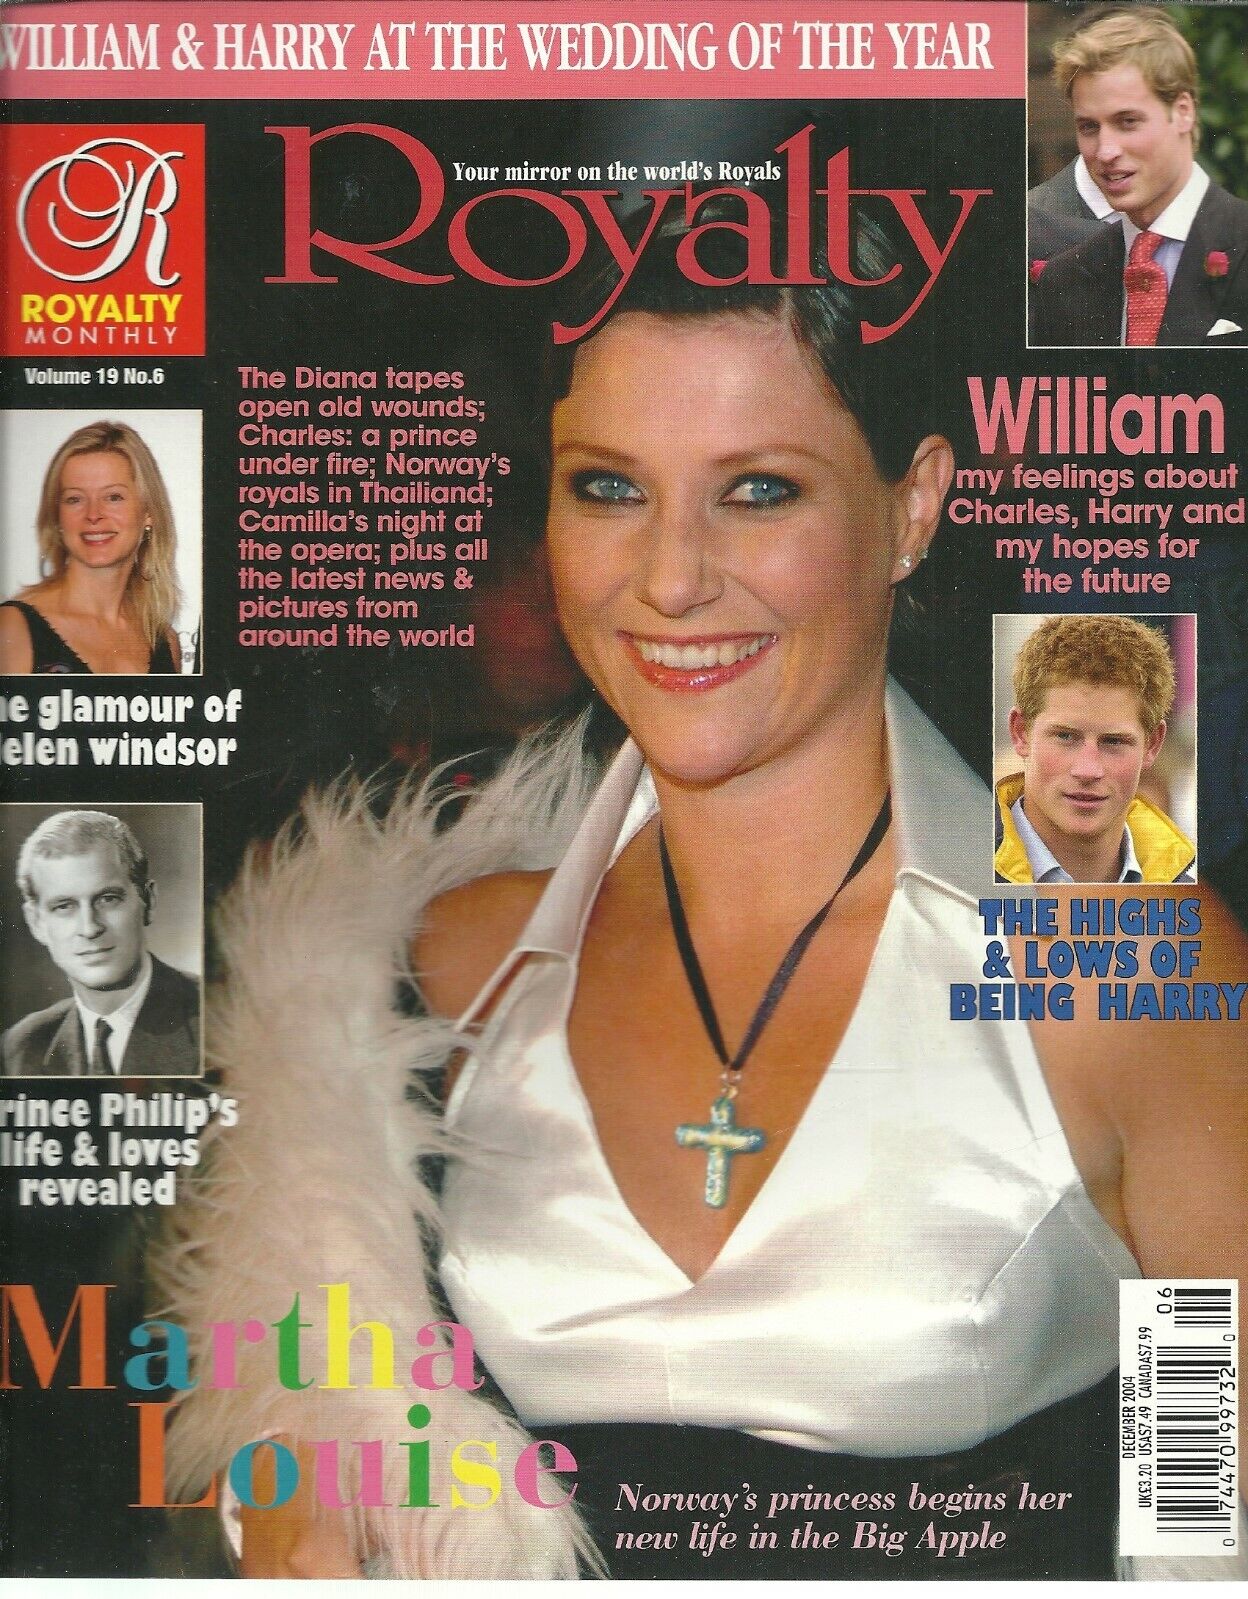  Royalty Magazine 2004 Vol 19 No 6 PRINCESS DIANA, TAPES MARTHA LOUISE NORWAY VG